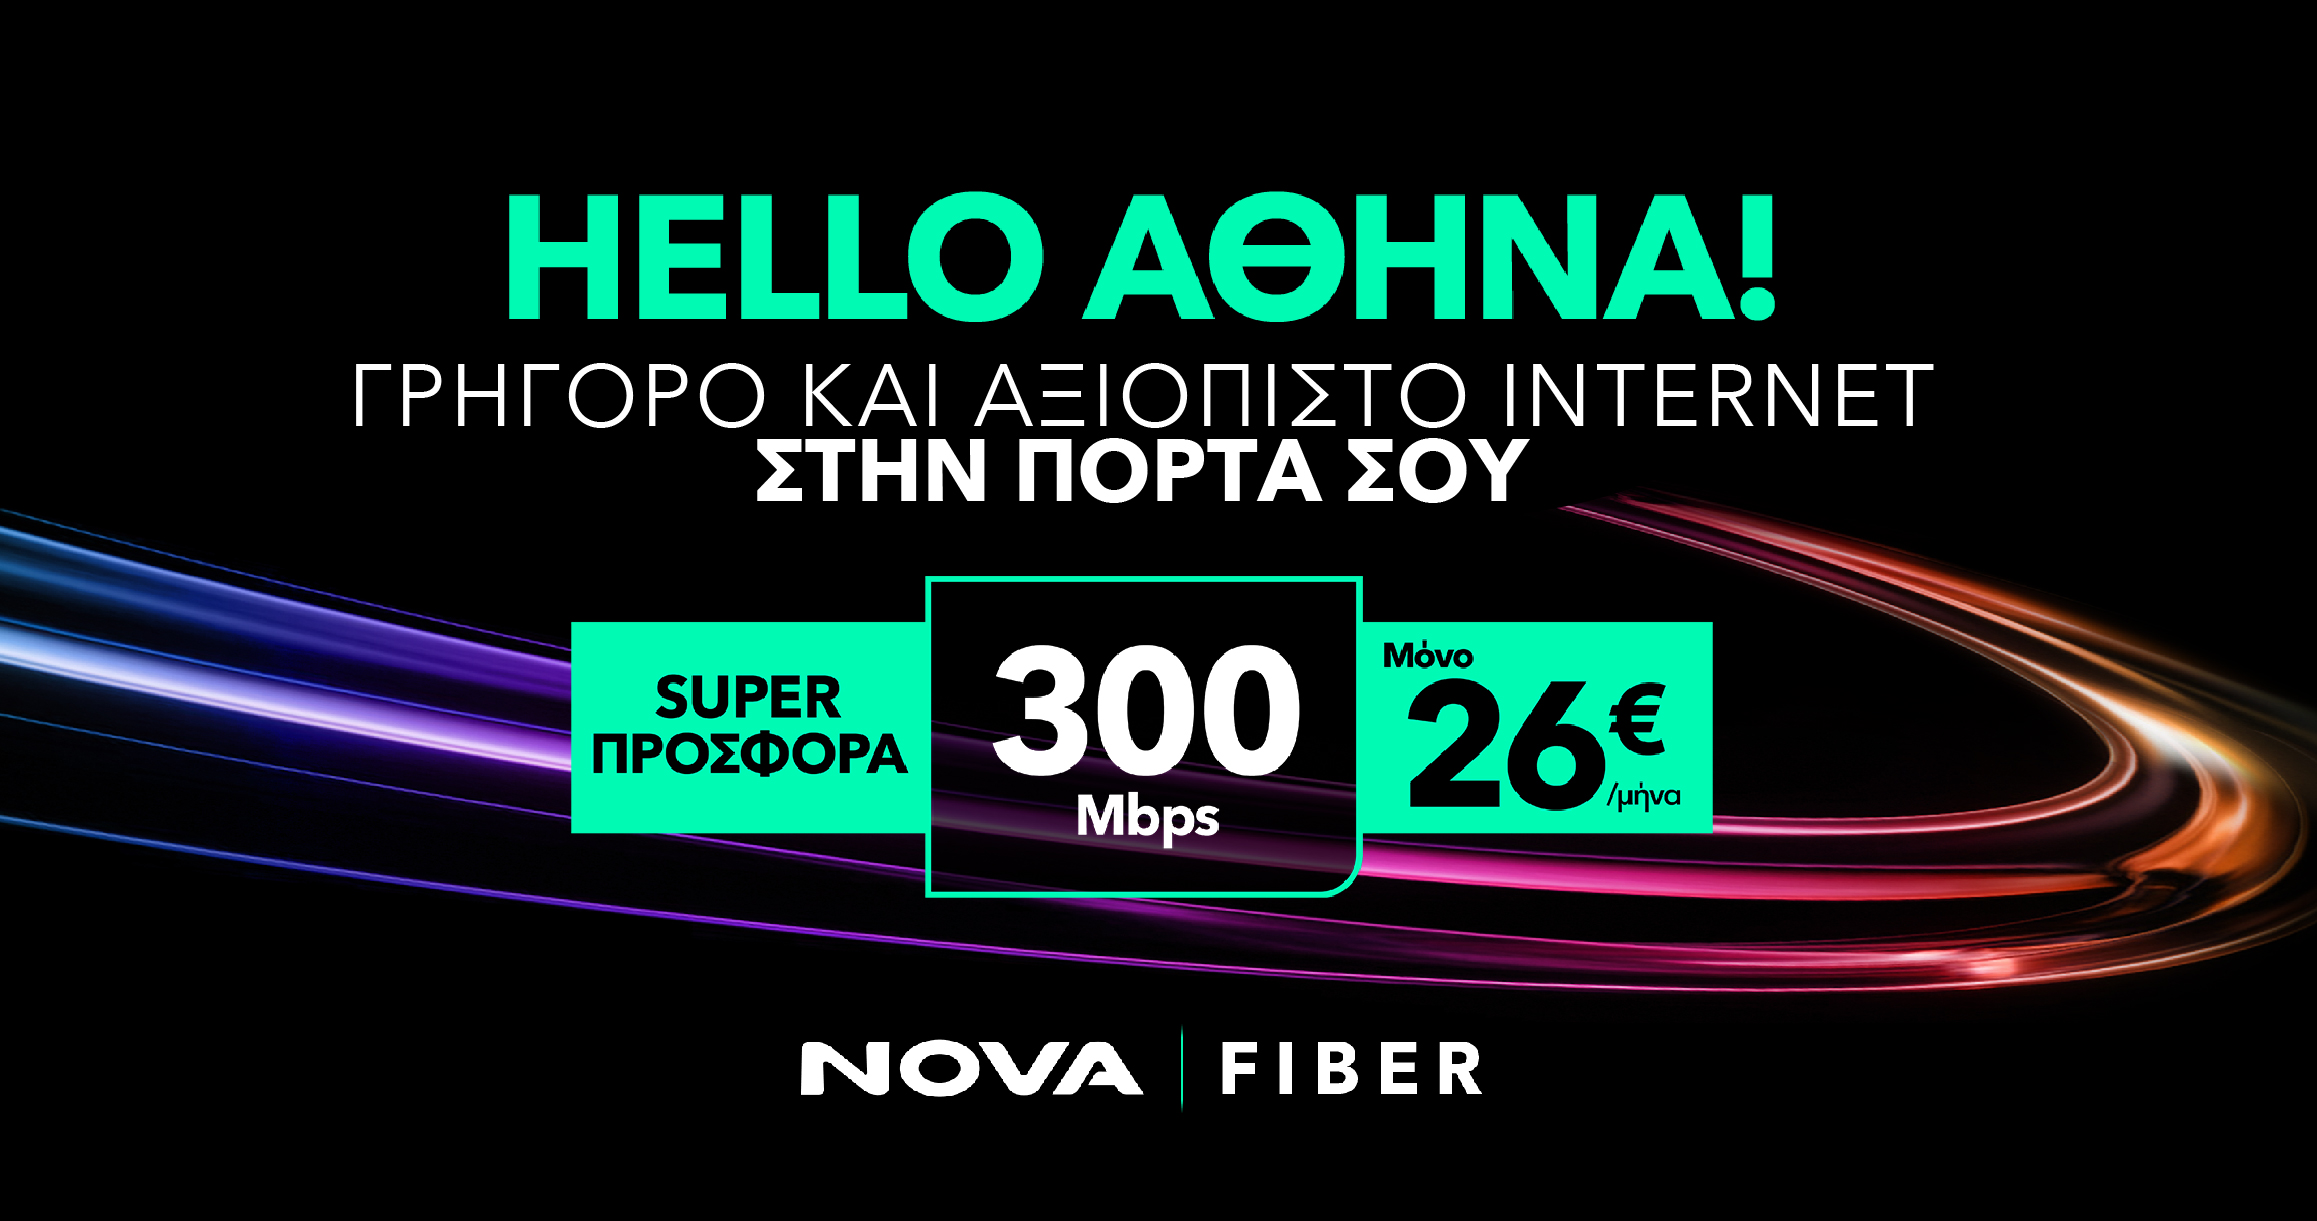 Hello Athens: Η Nova φέρνει υπερυψηλές ταχύτητες Internet σε ακόμα περισσότερες γειτονιές της Αθήνας